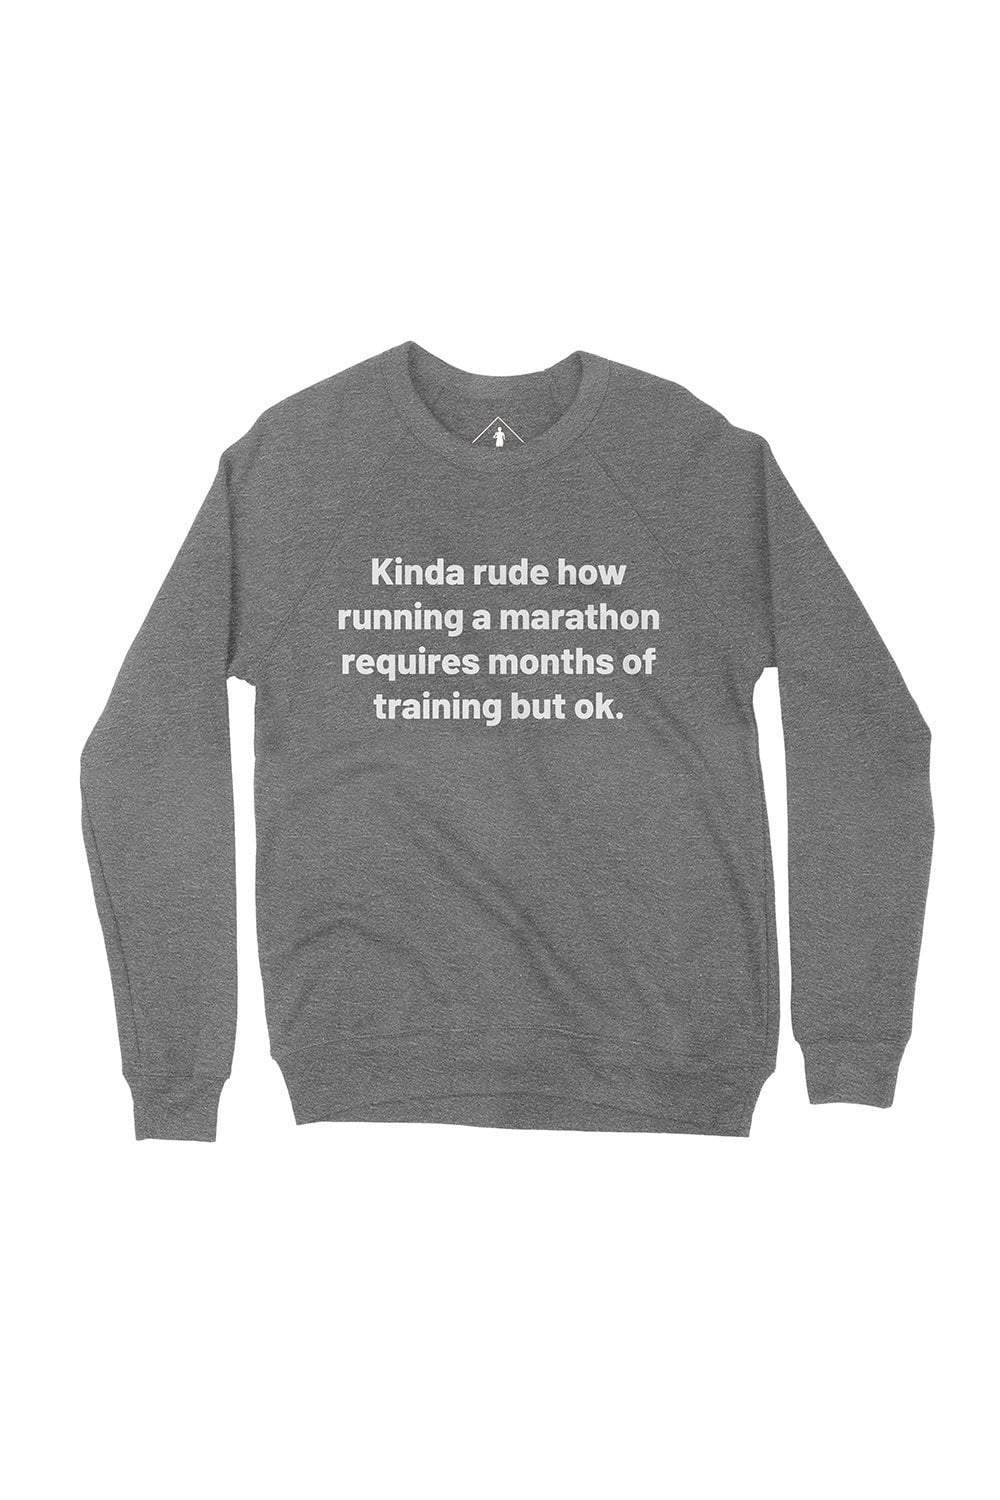 Kinda rude how running a marathon requires months of training but ok. Sweatshirt